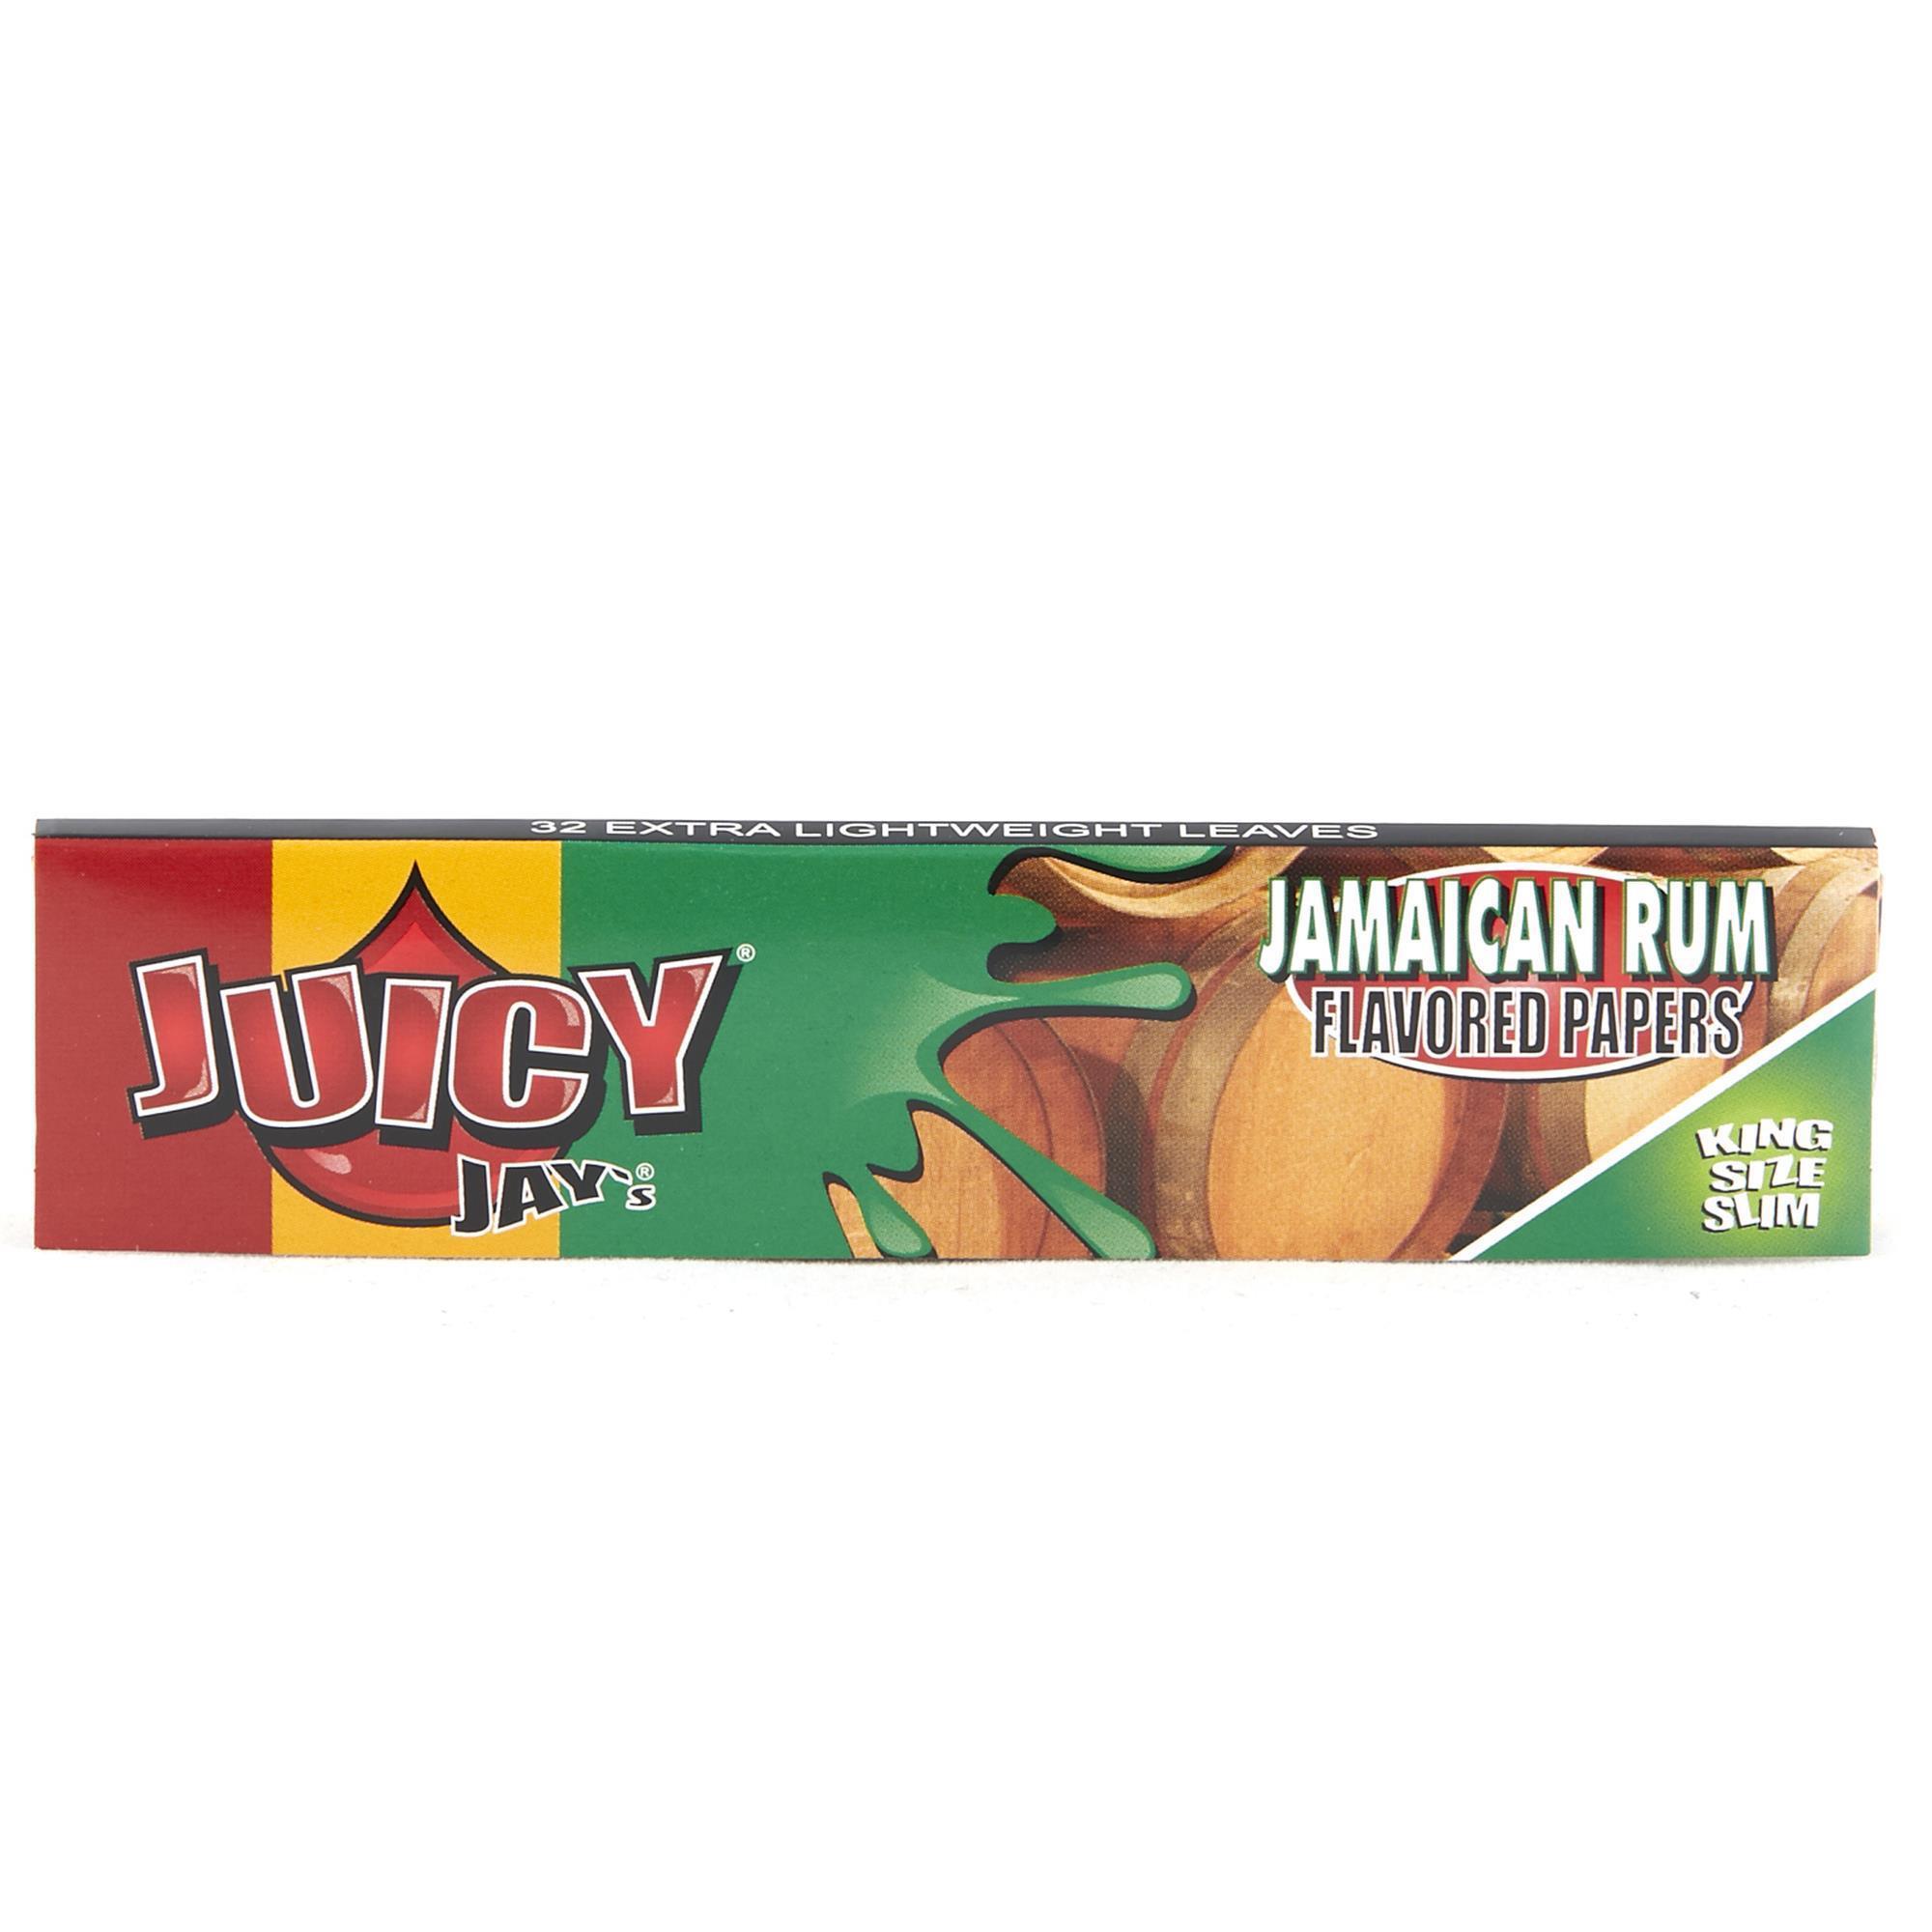 JUICY JAYS JAMAICAN RUM